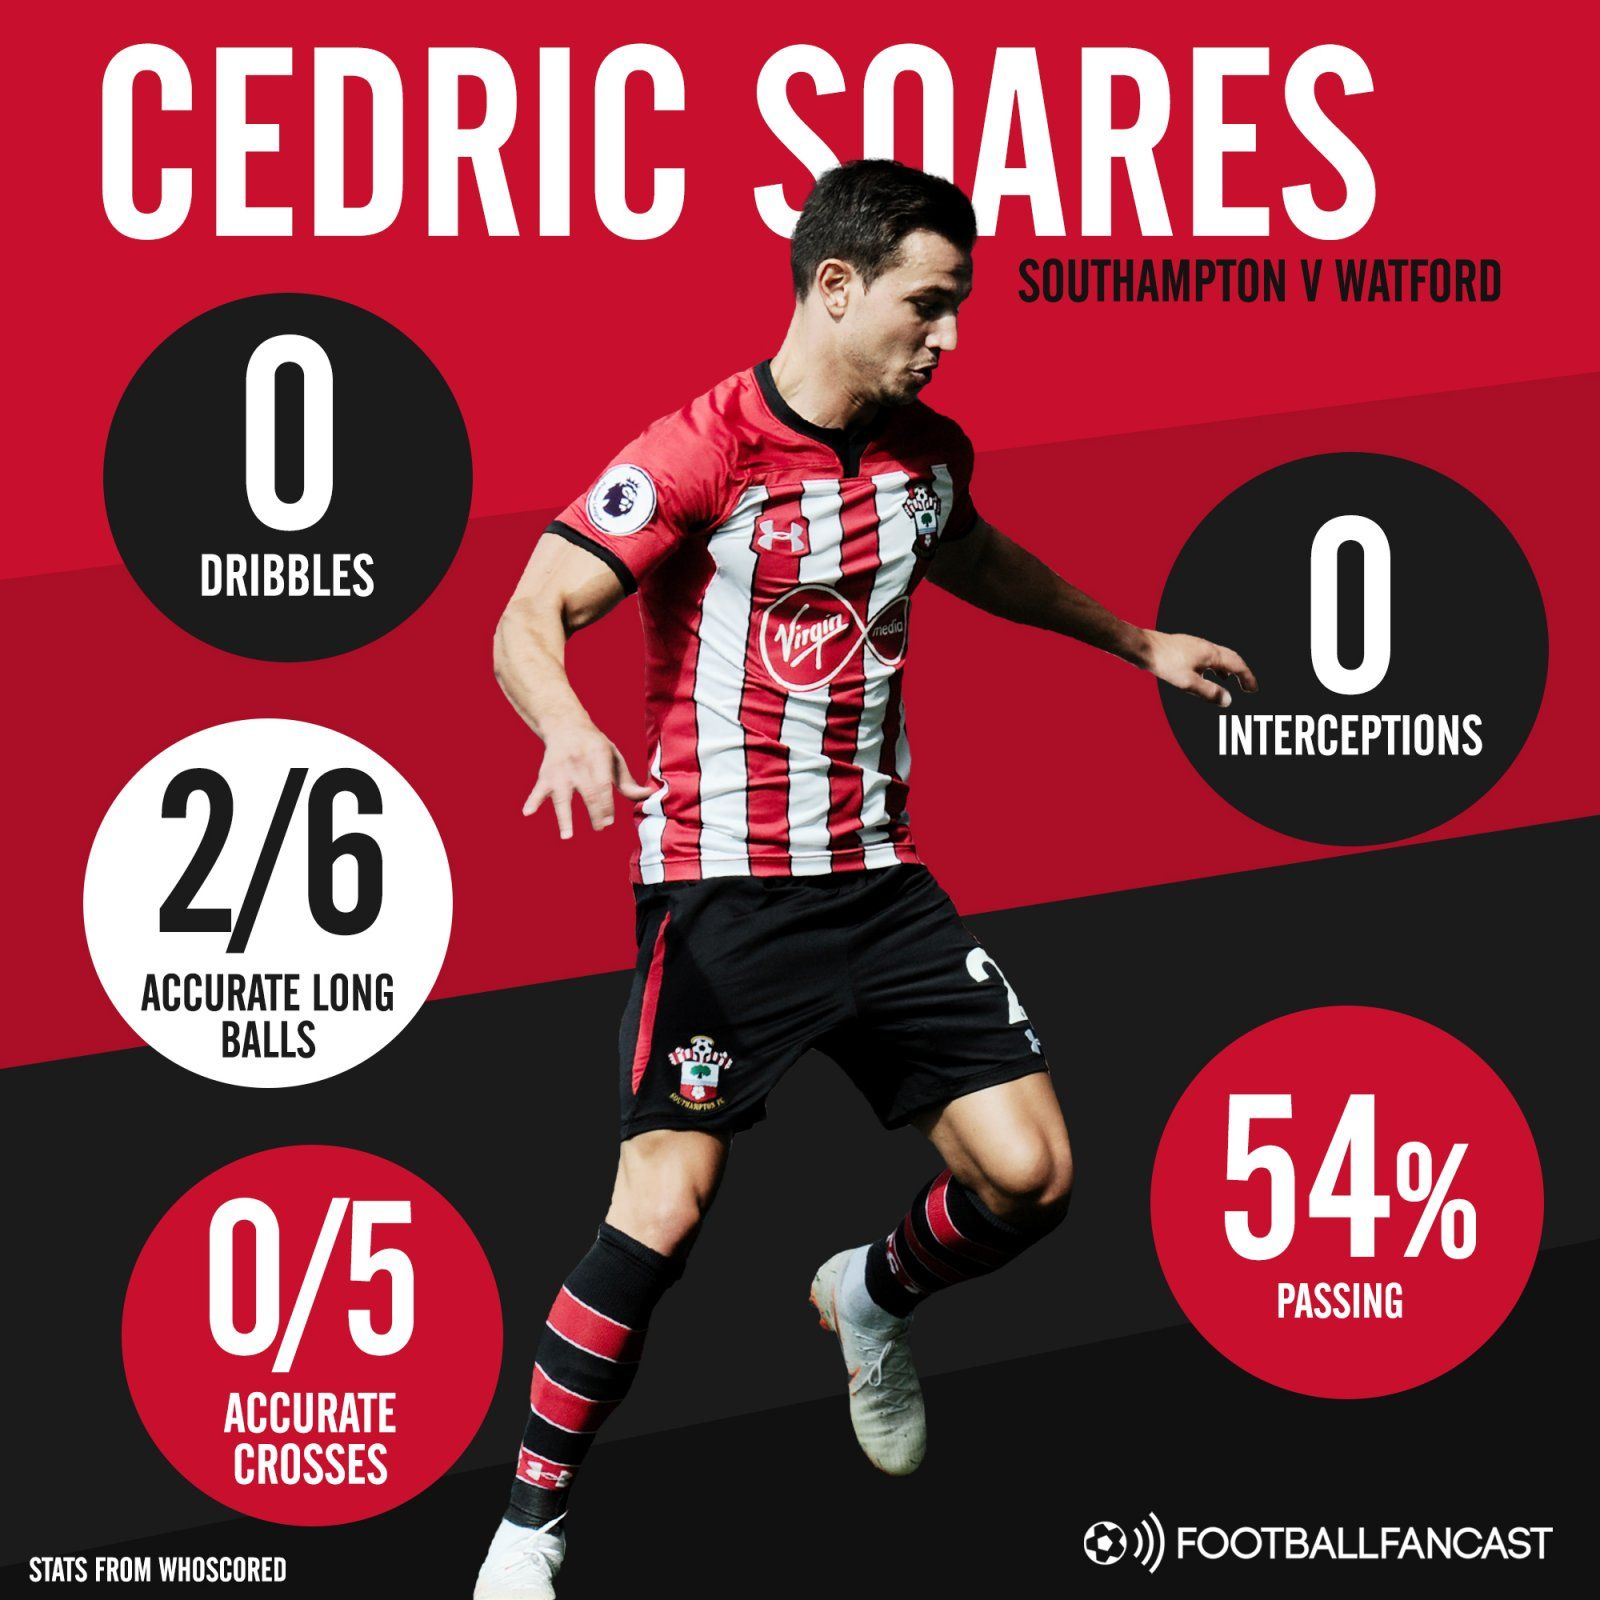 Southampton defender Cedric Soares' stats vs Watford